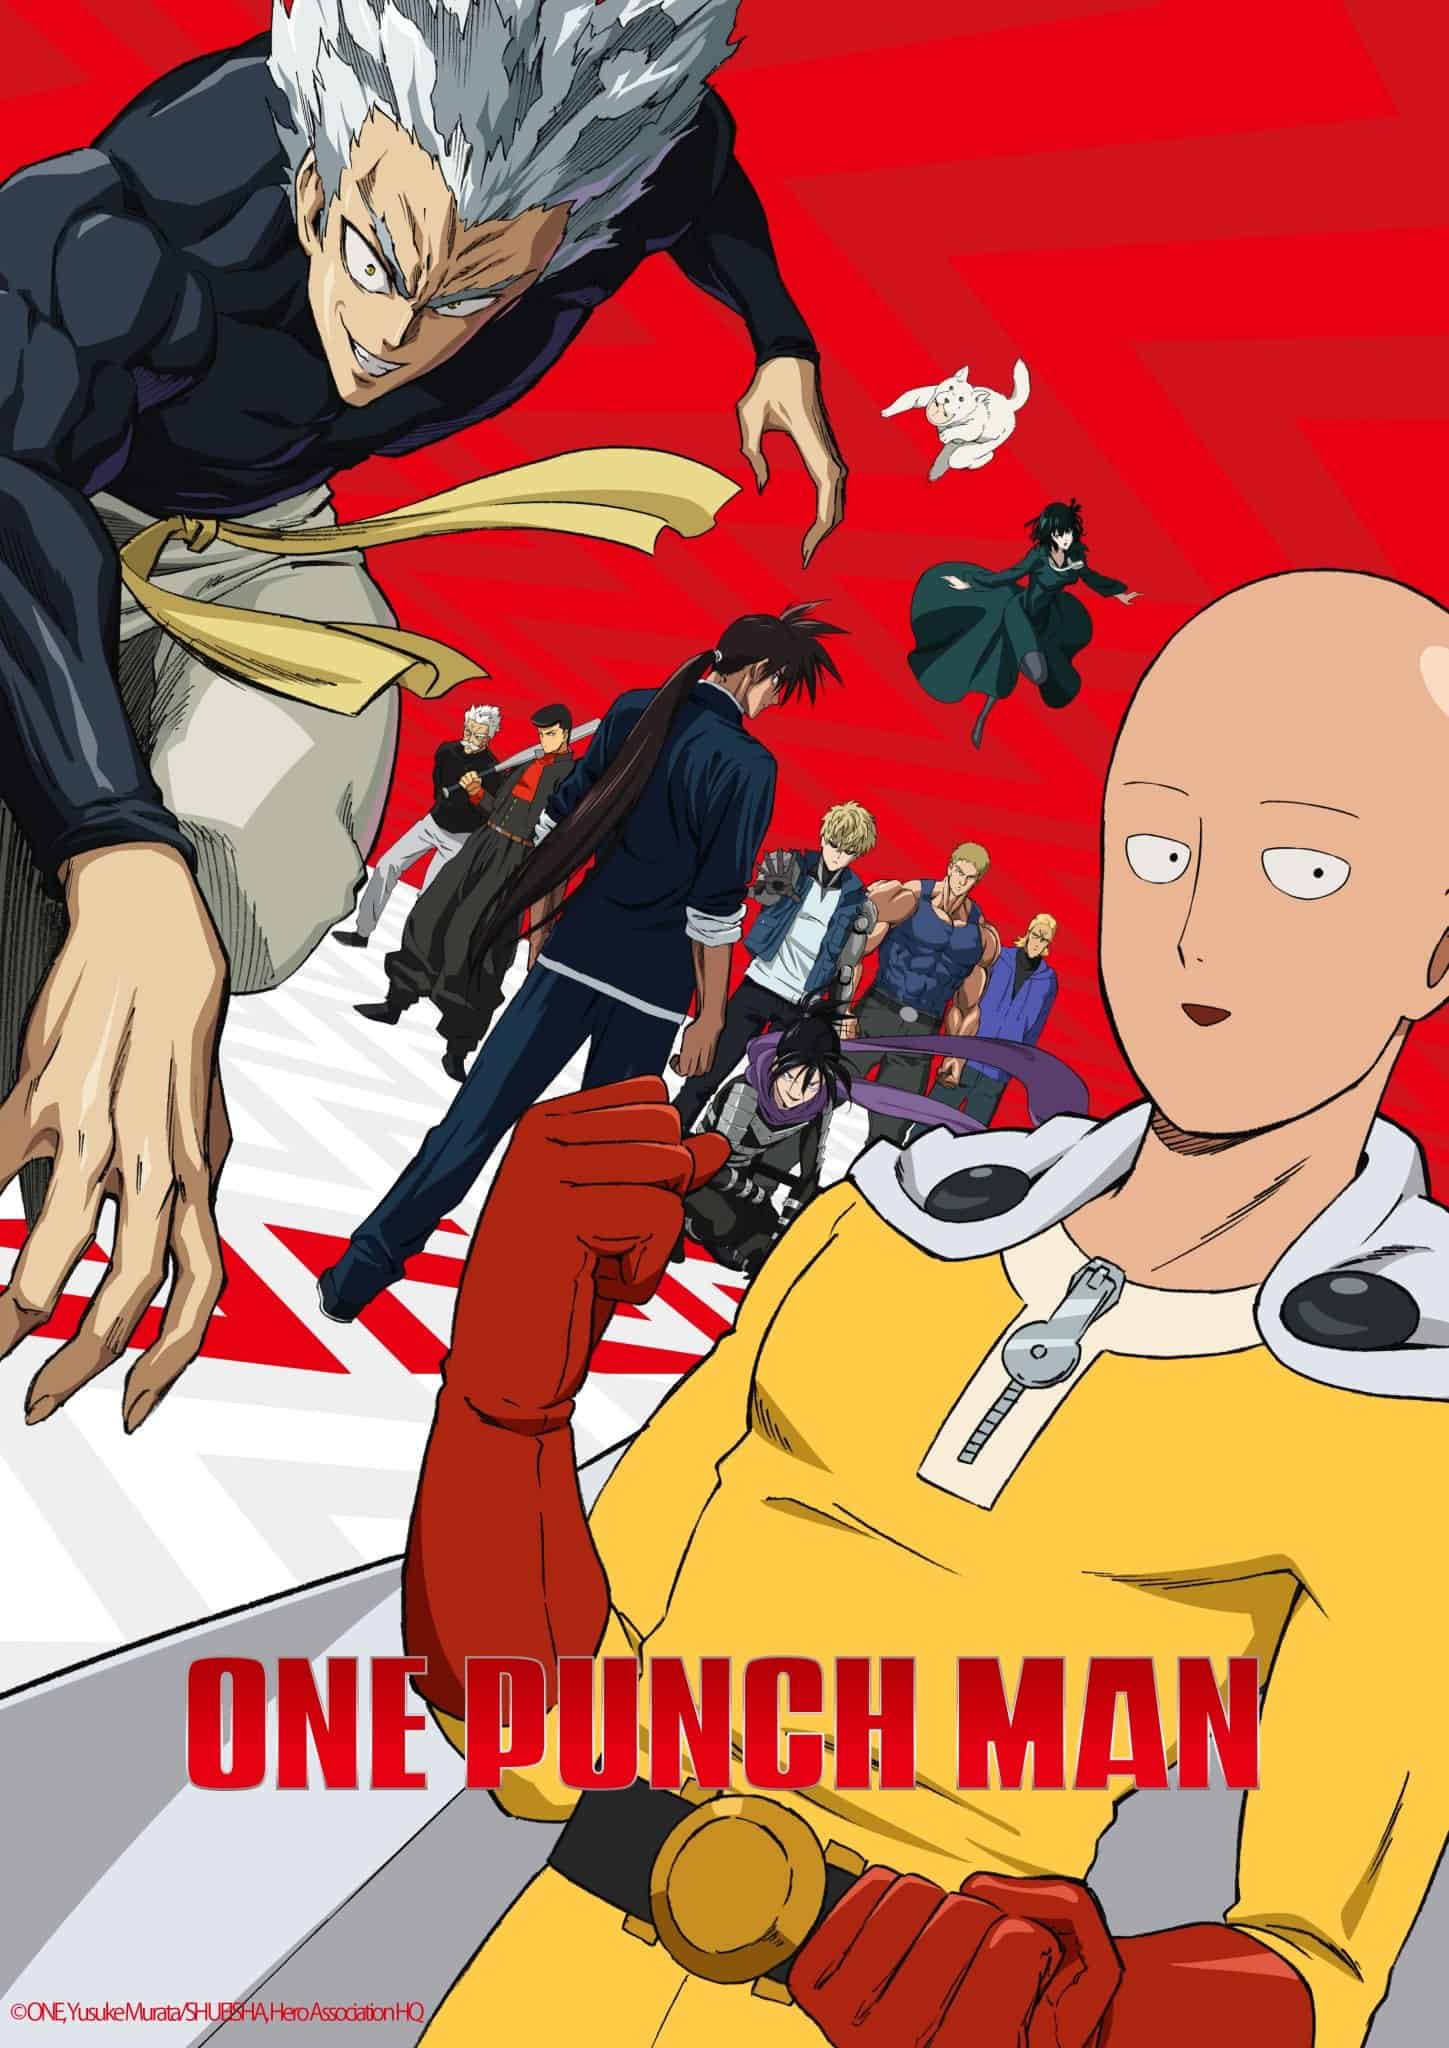 Suiryu One Punch Man Wallpaper